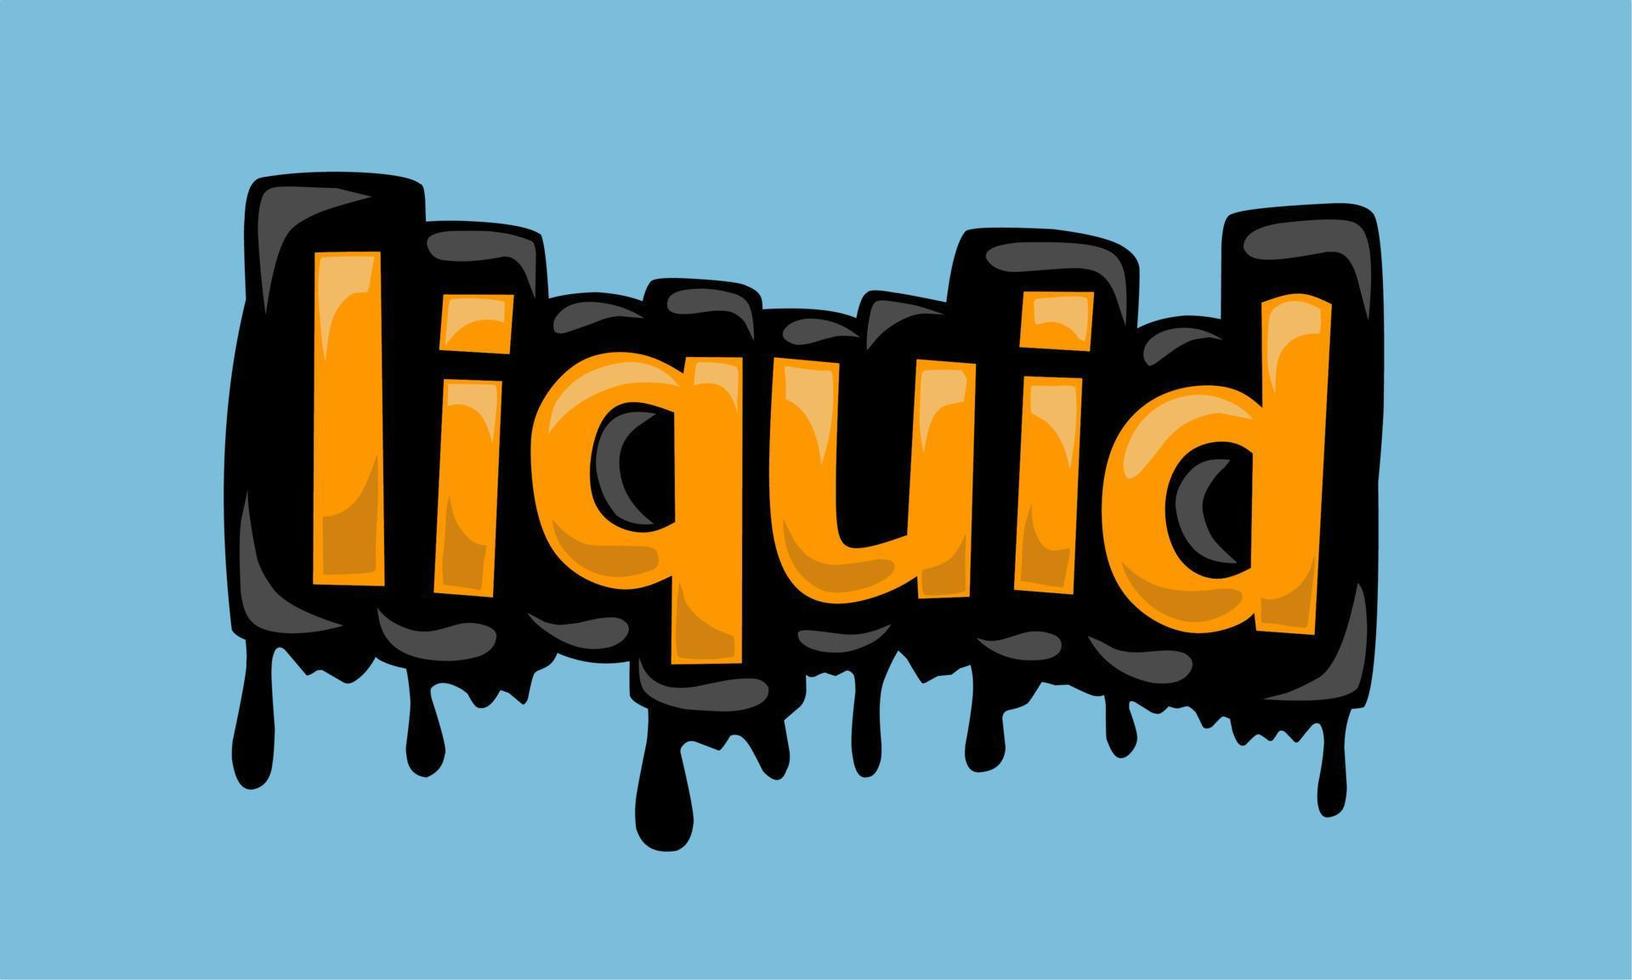 LIQUID writing vector design on blue background